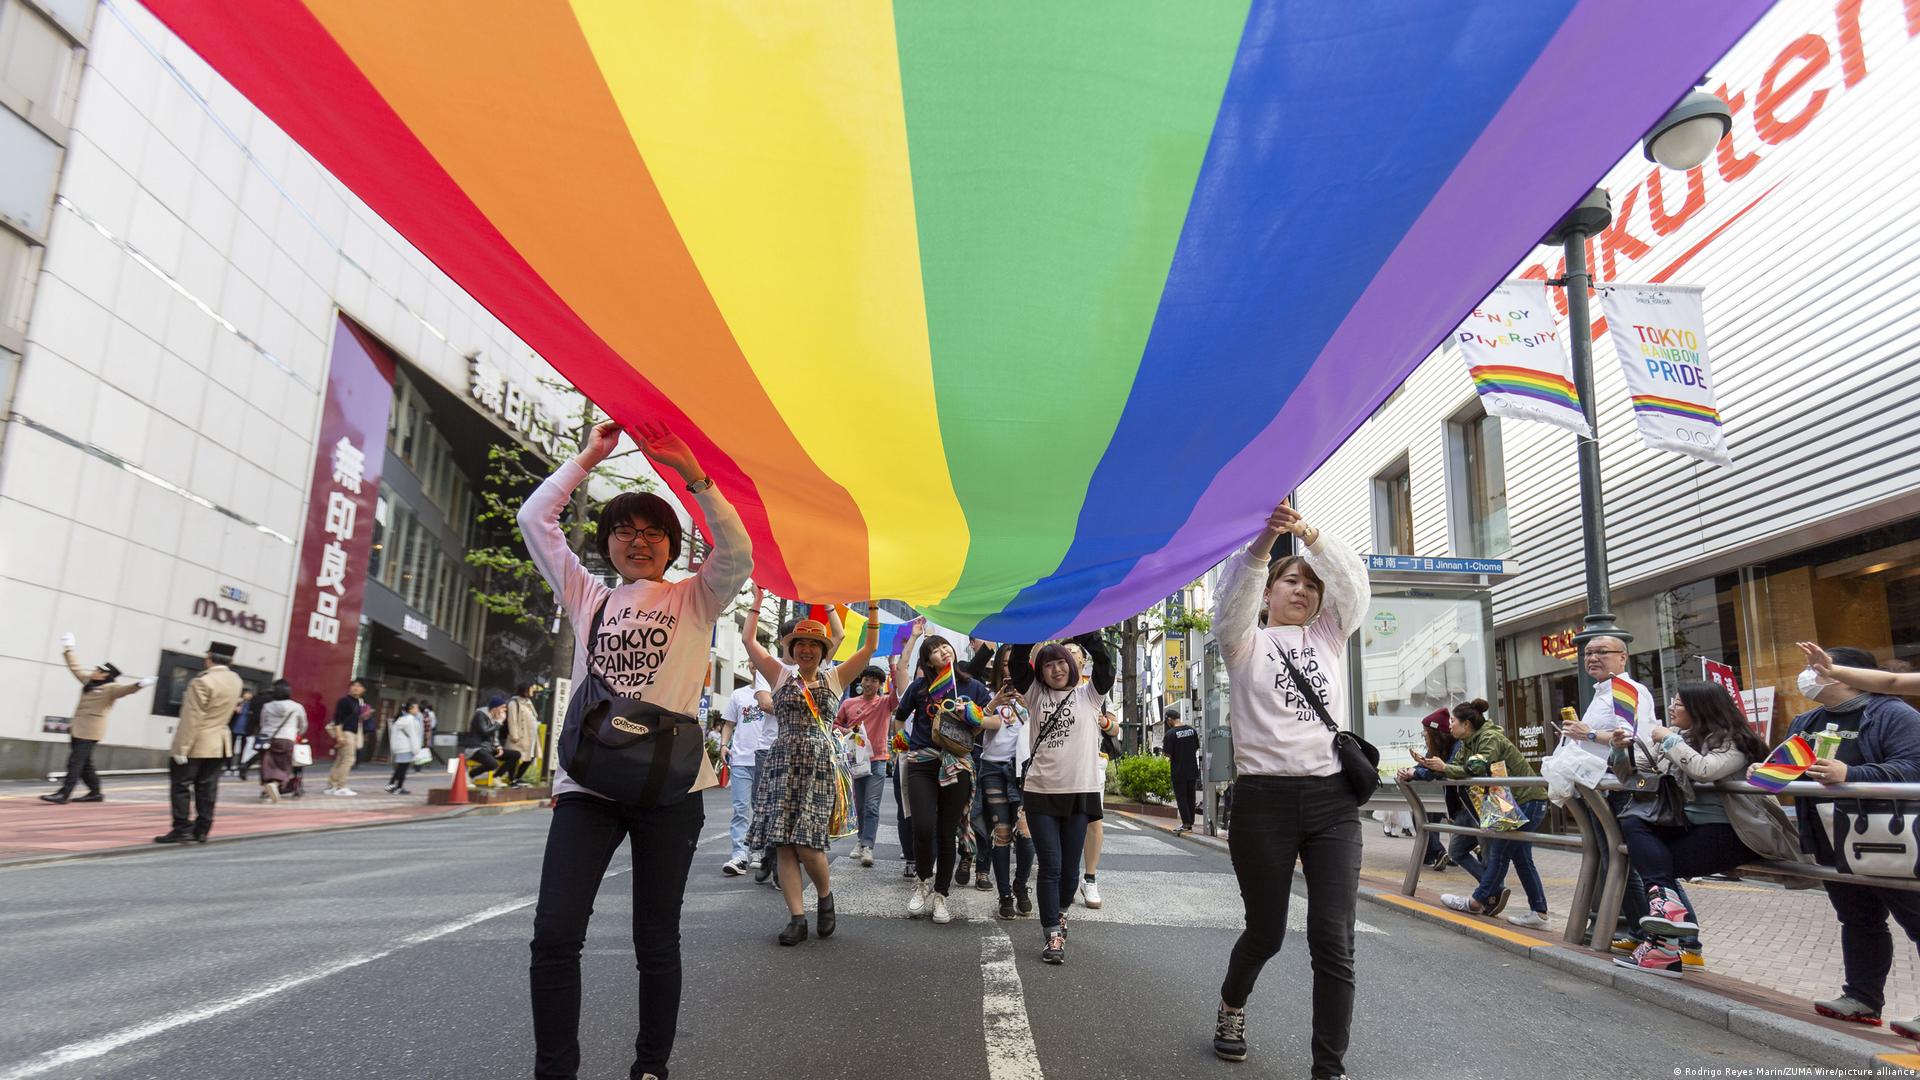 Xnxxwsex - Japan ruling seeks balance on same-sex marriage â€“ DW â€“ 12/01/2022